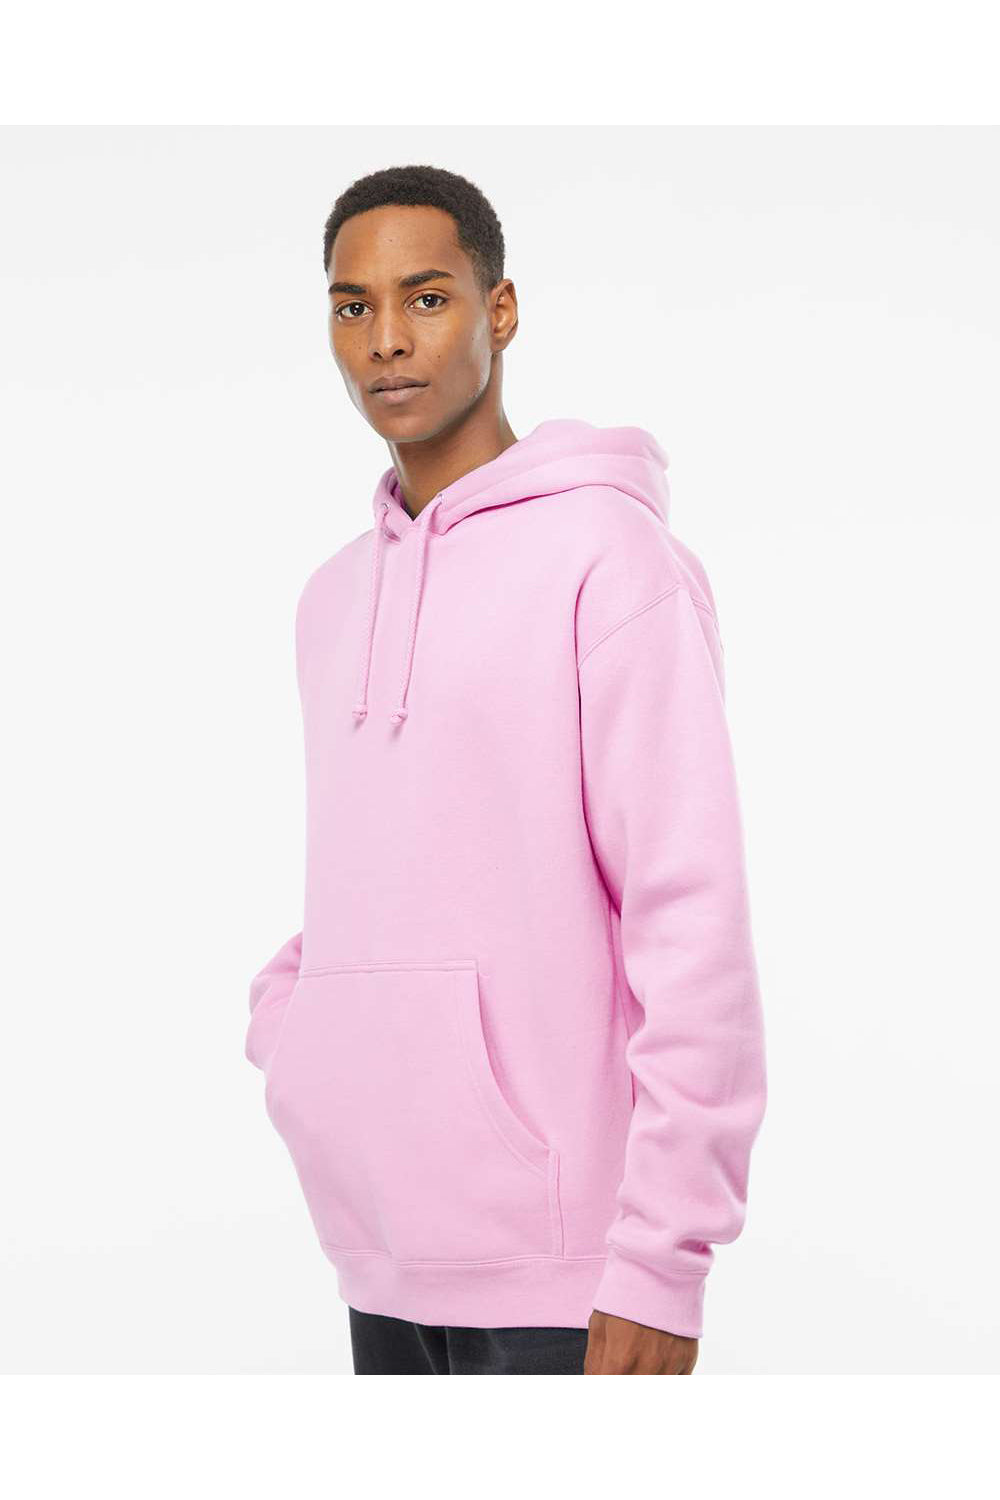 Independent Trading Co. IND4000 Mens Hooded Sweatshirt Hoodie Light Pink Model Side